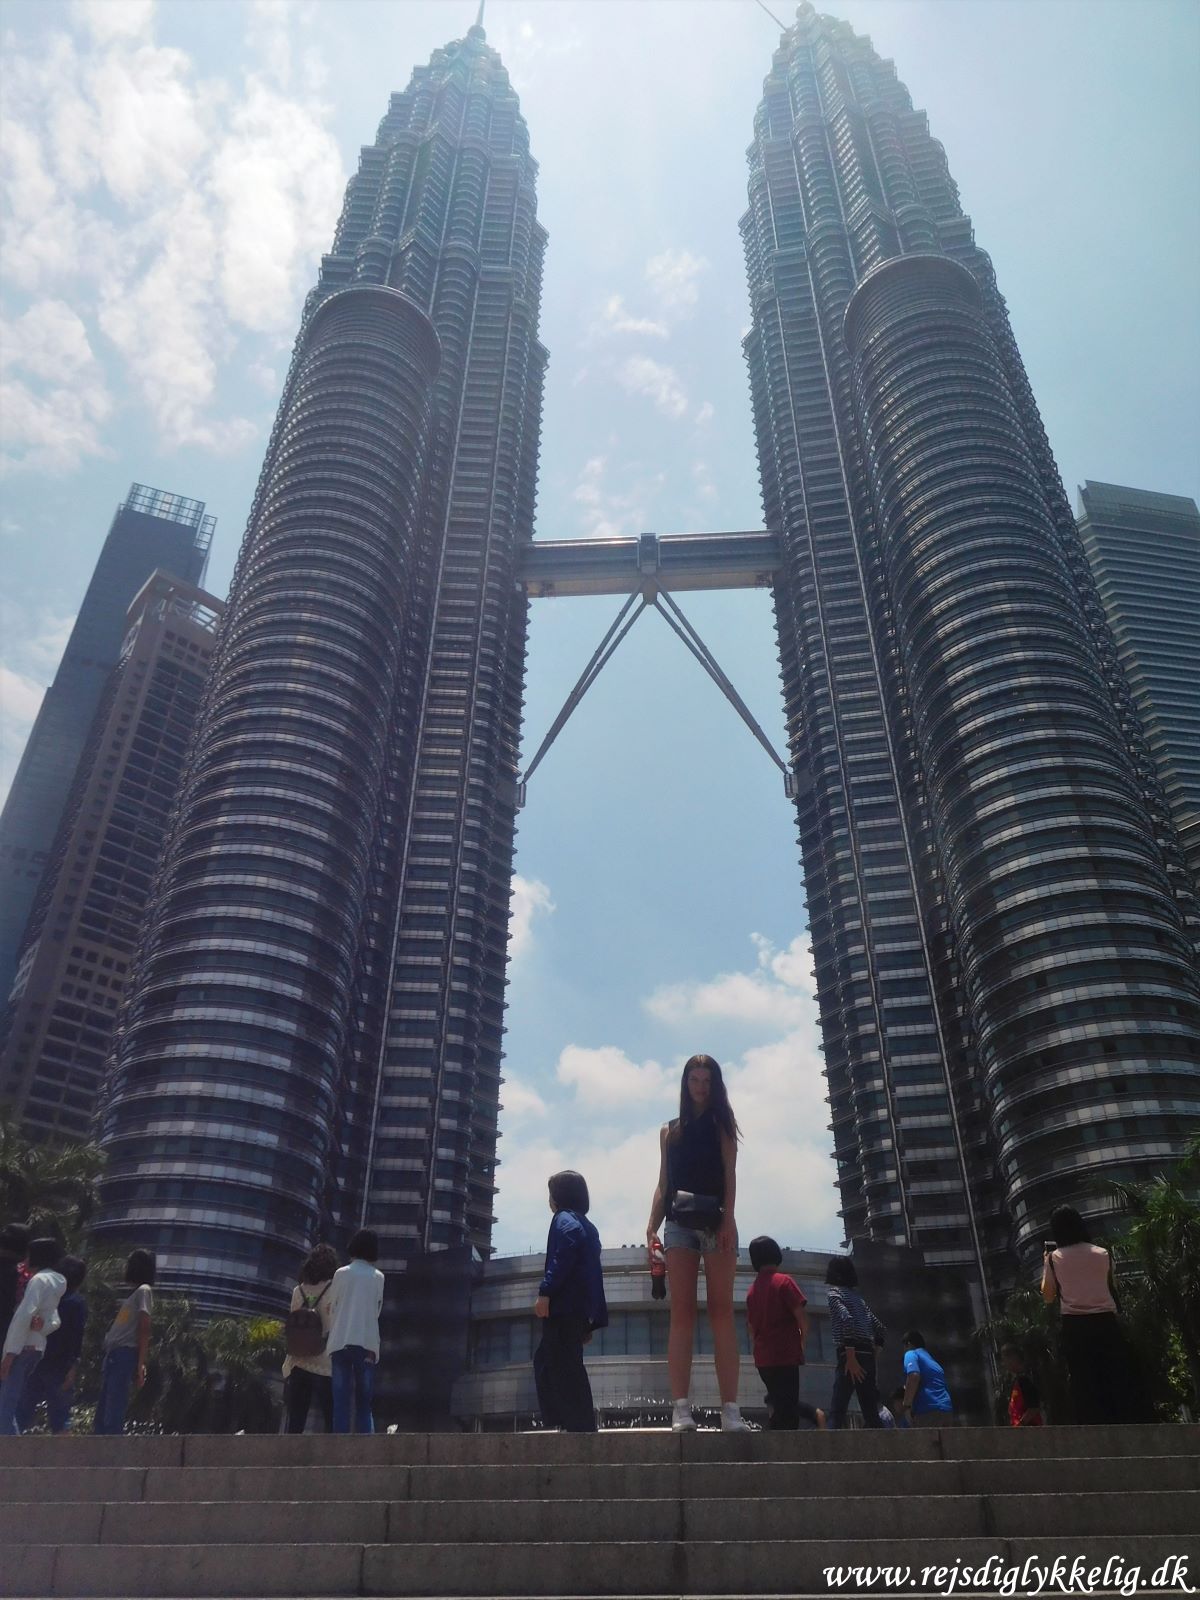 Tilbageblik på 2019 - Patronas Towers i Kuala Lumpur - Rejsdiglykkelig.dk